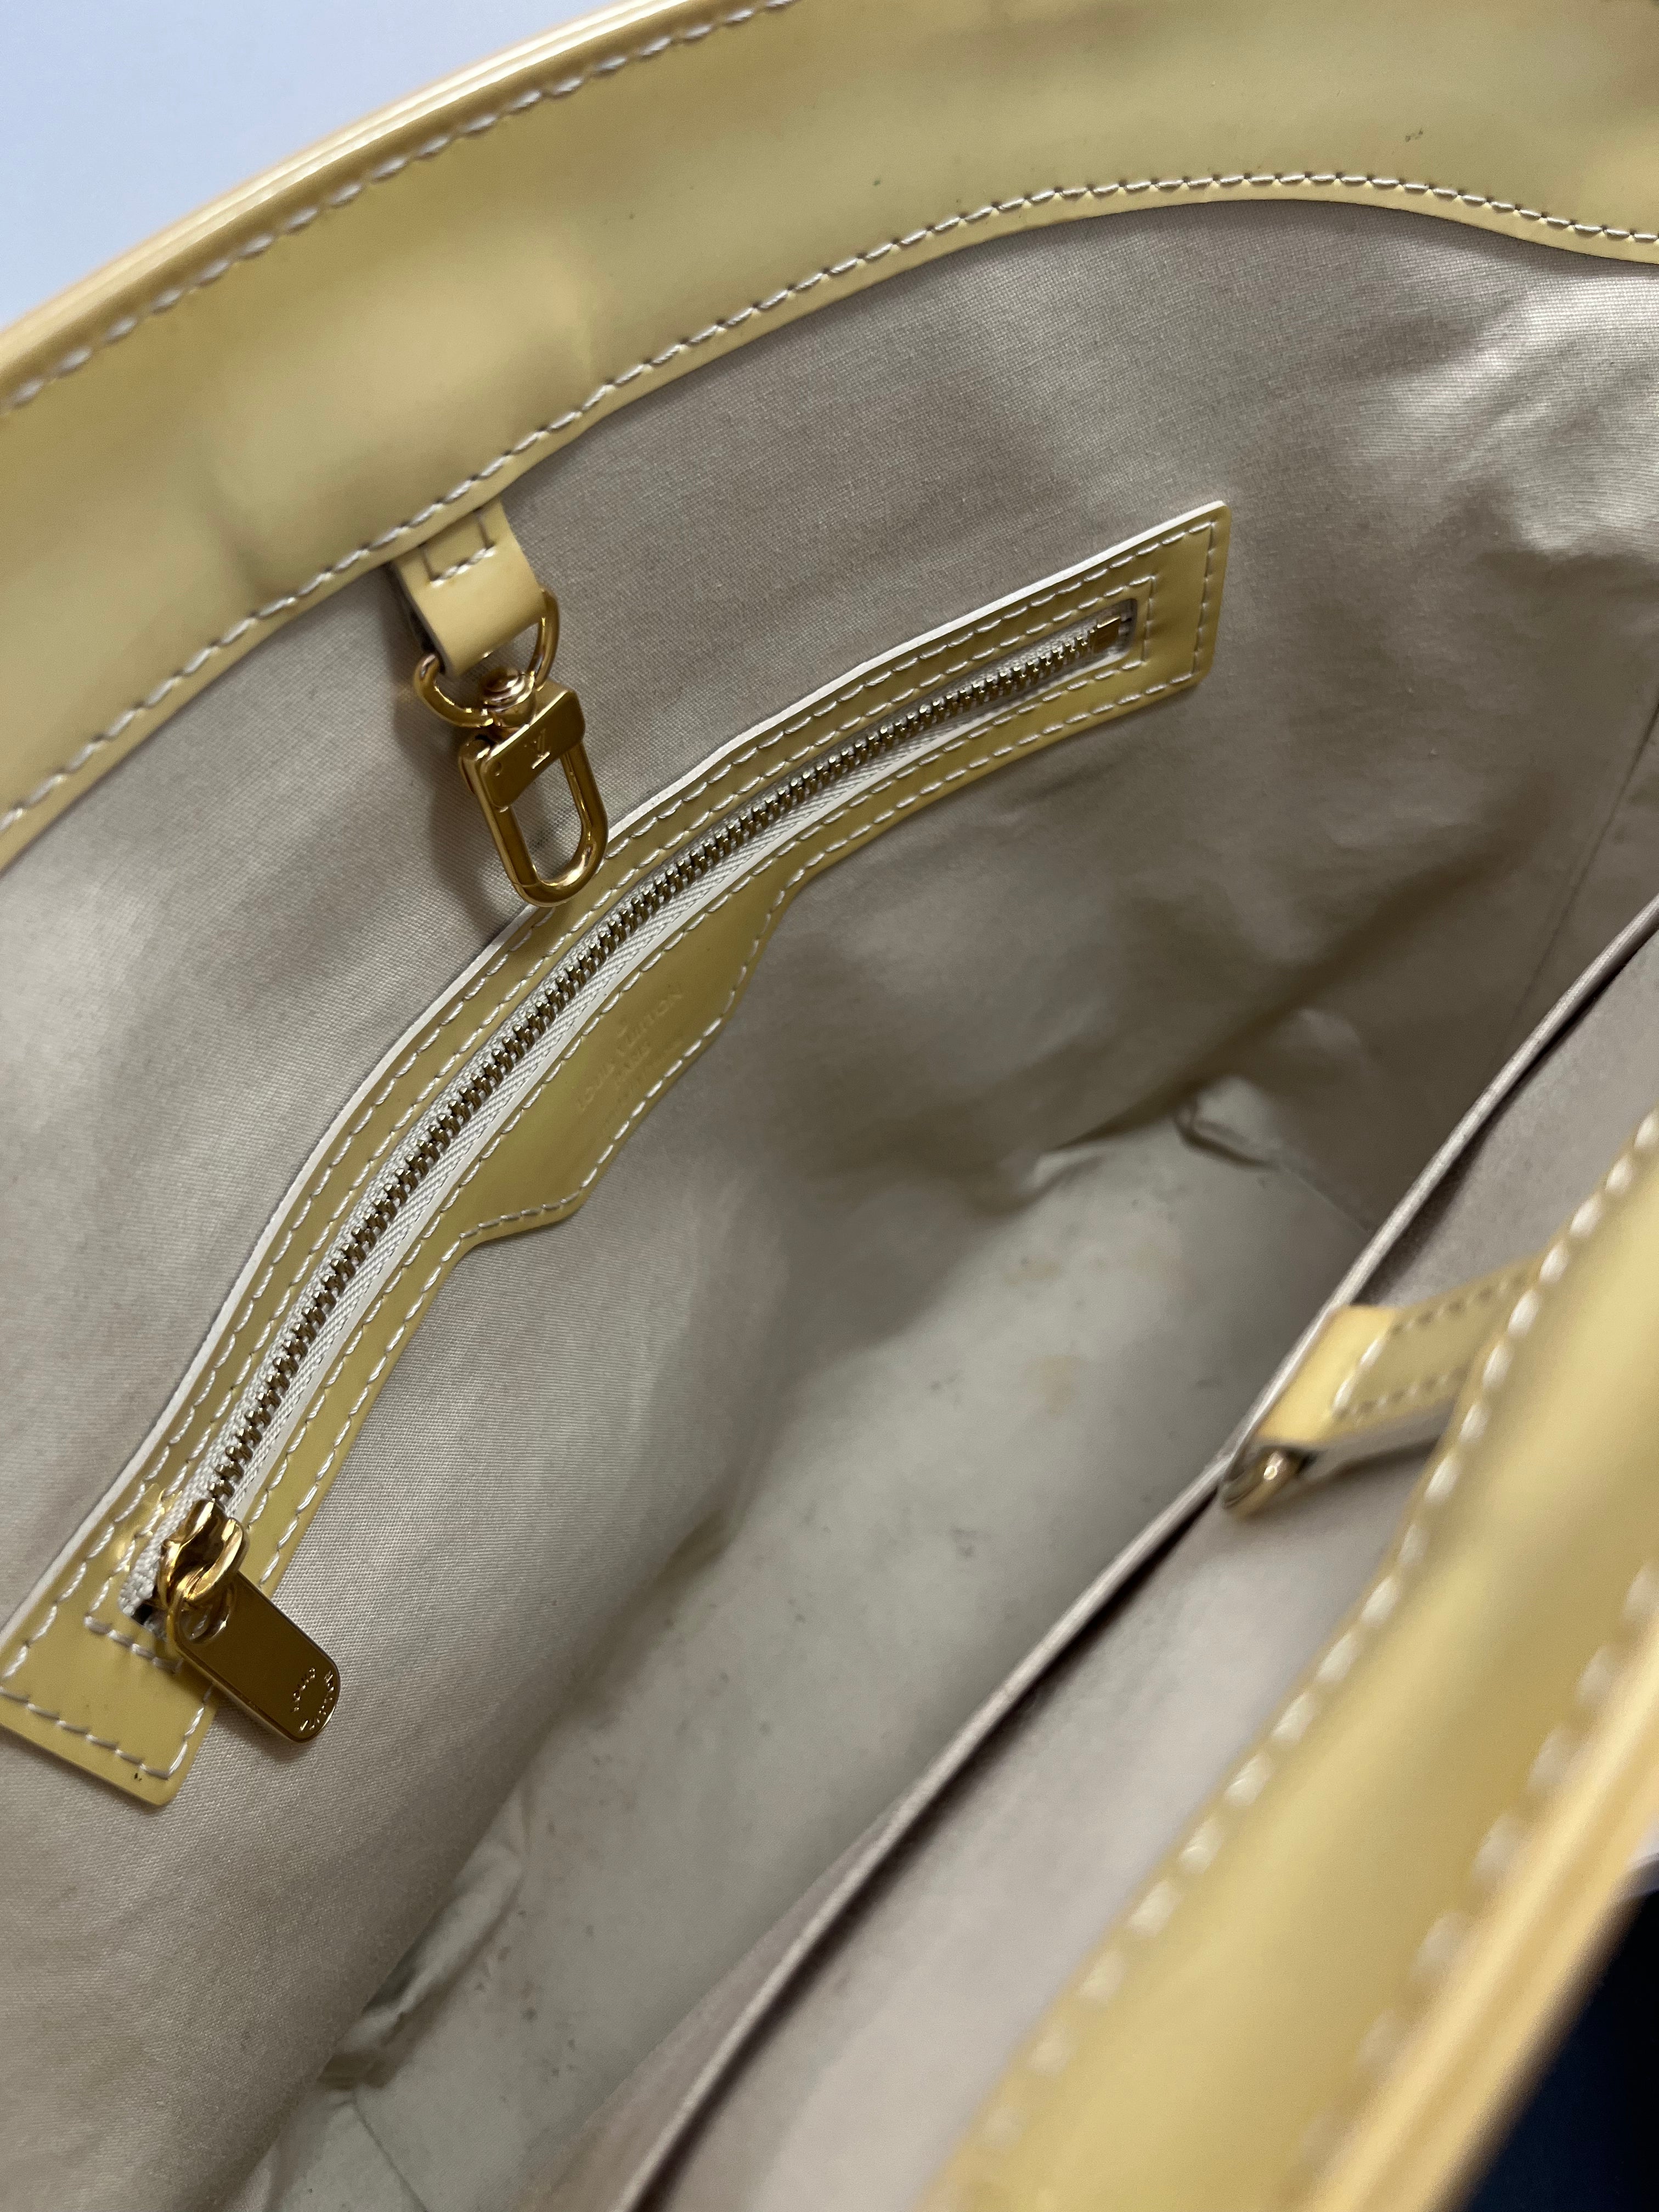 Louis Vuitton Vernis Bag